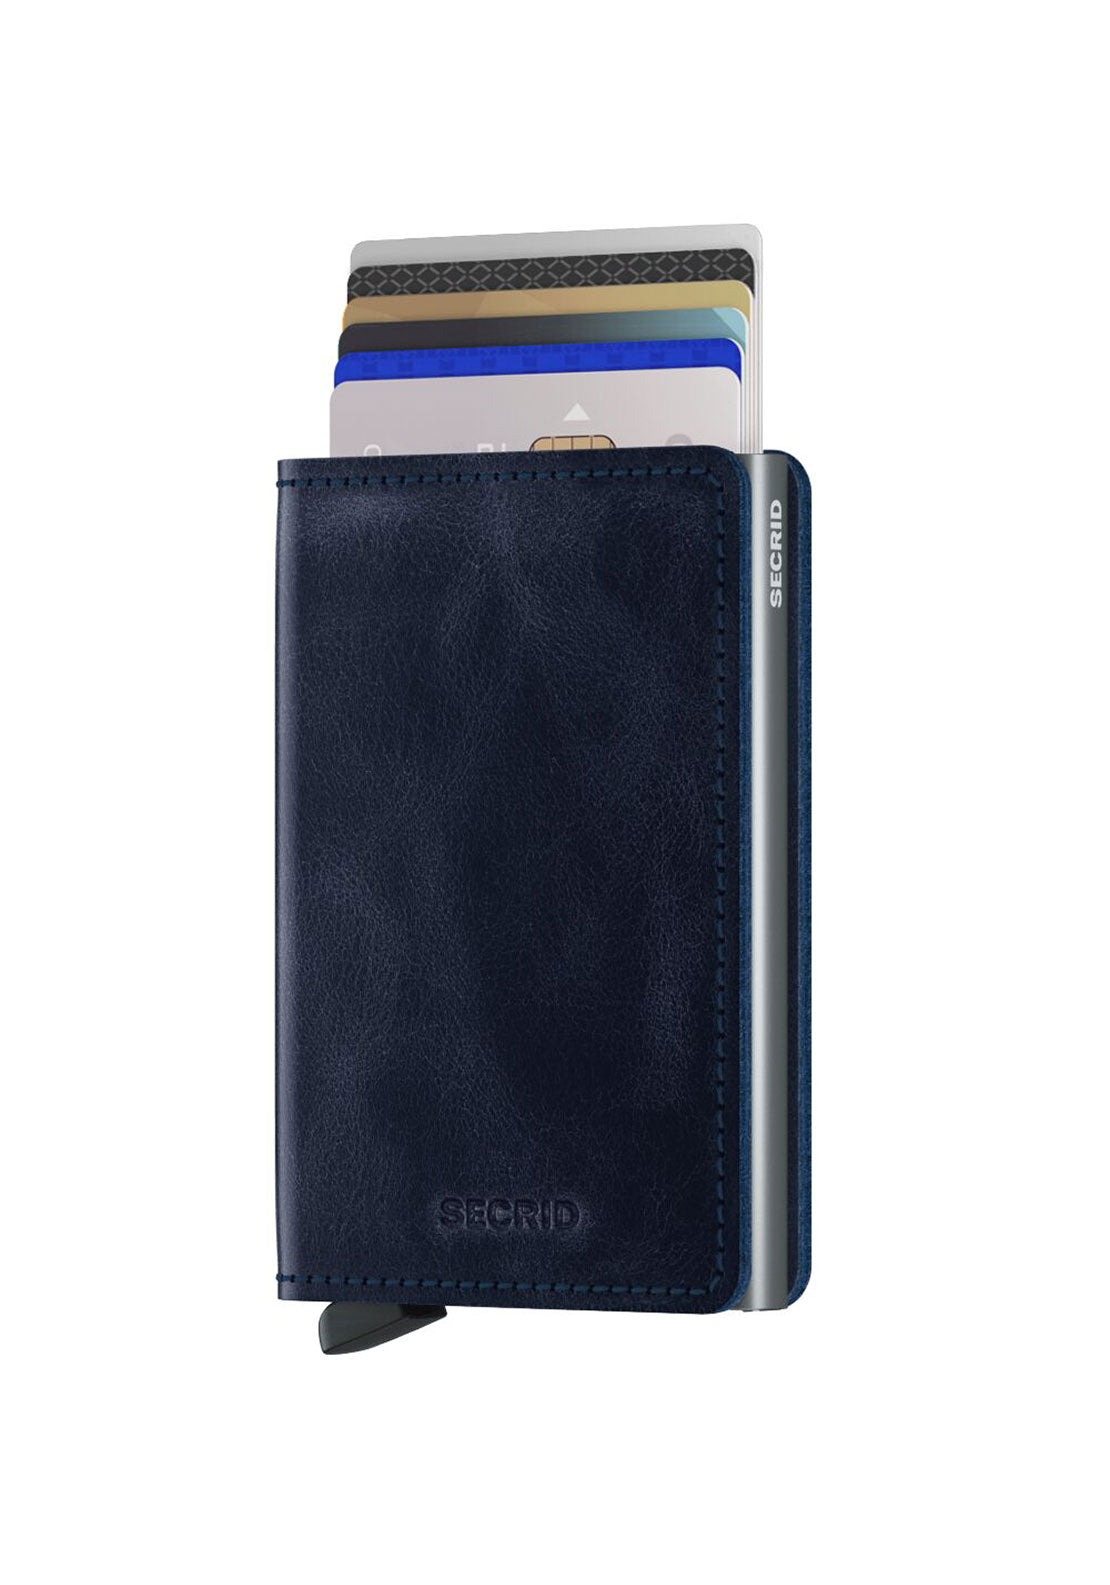 Secrid Slim Vintage Wallet - Blue 1 Shaws Department Stores